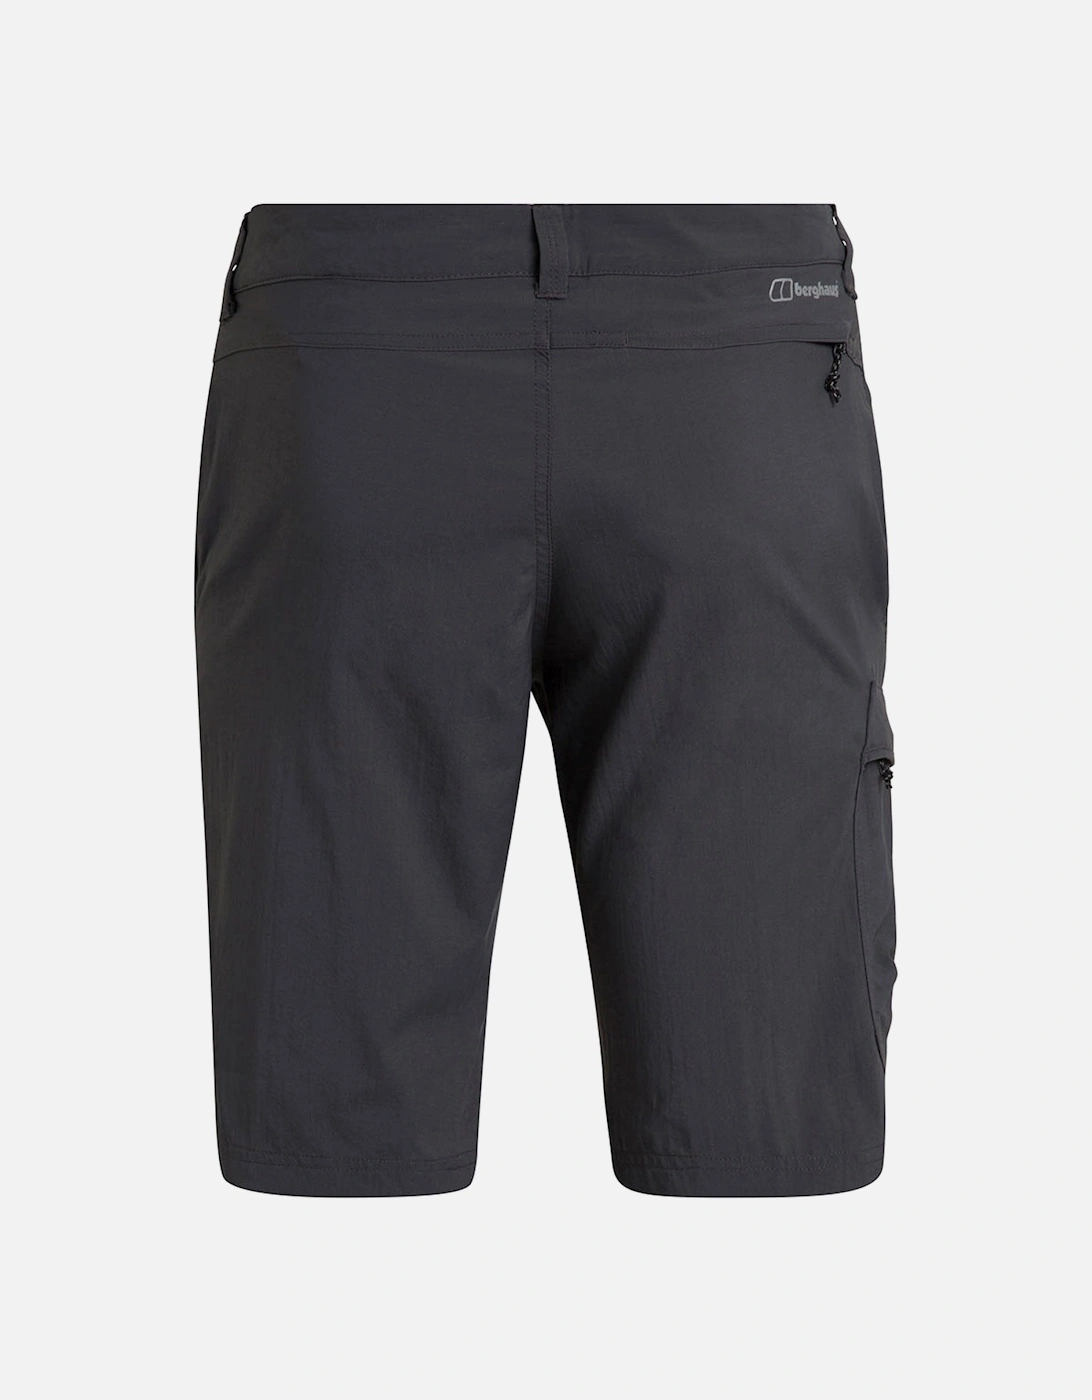 Mens Navigator 2.0 Cargo Shorts (Grey)